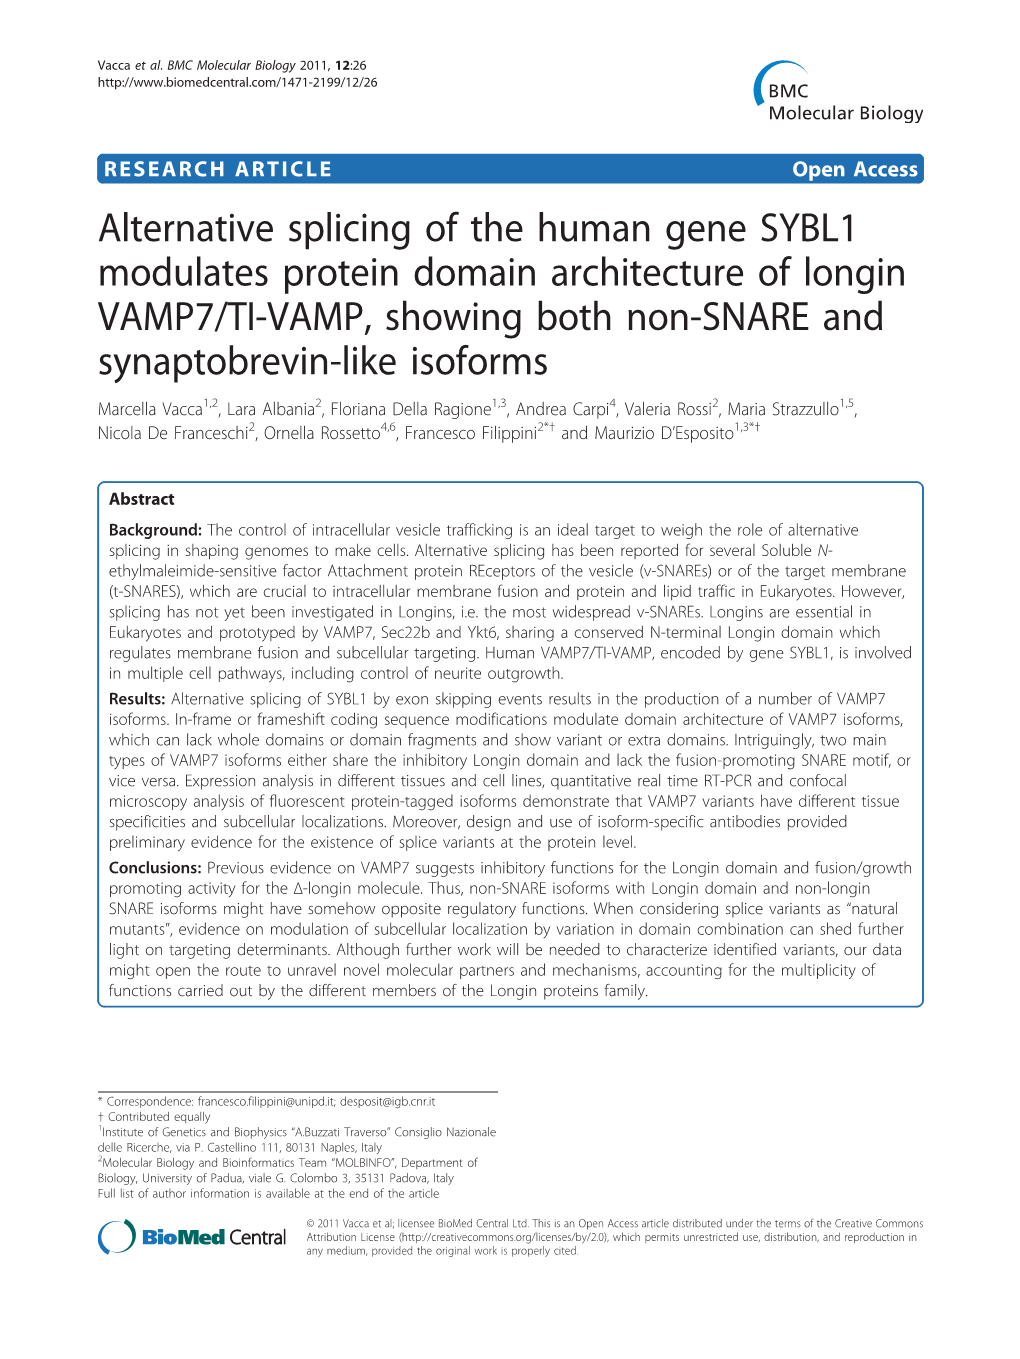 Alternative Splicing of the Human Gene SYBL1 Modulates Protein Domain